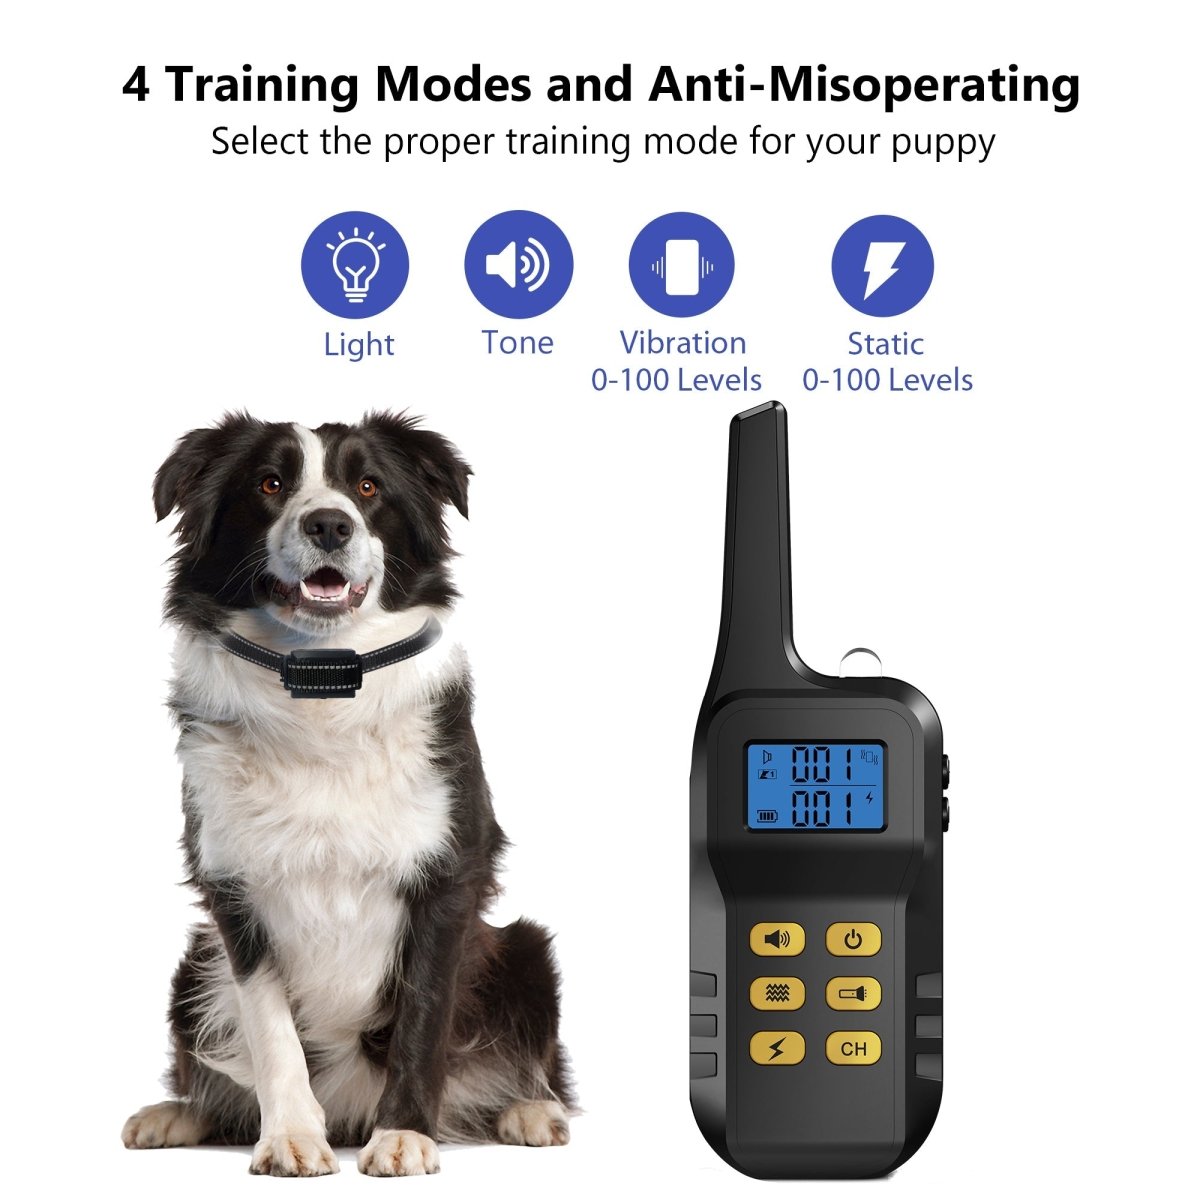 Dog Training Collar T720 for Hunting - 3300ft Range, IPX68 Waterproof, LED Mode, 2 Dog Set - Pawious